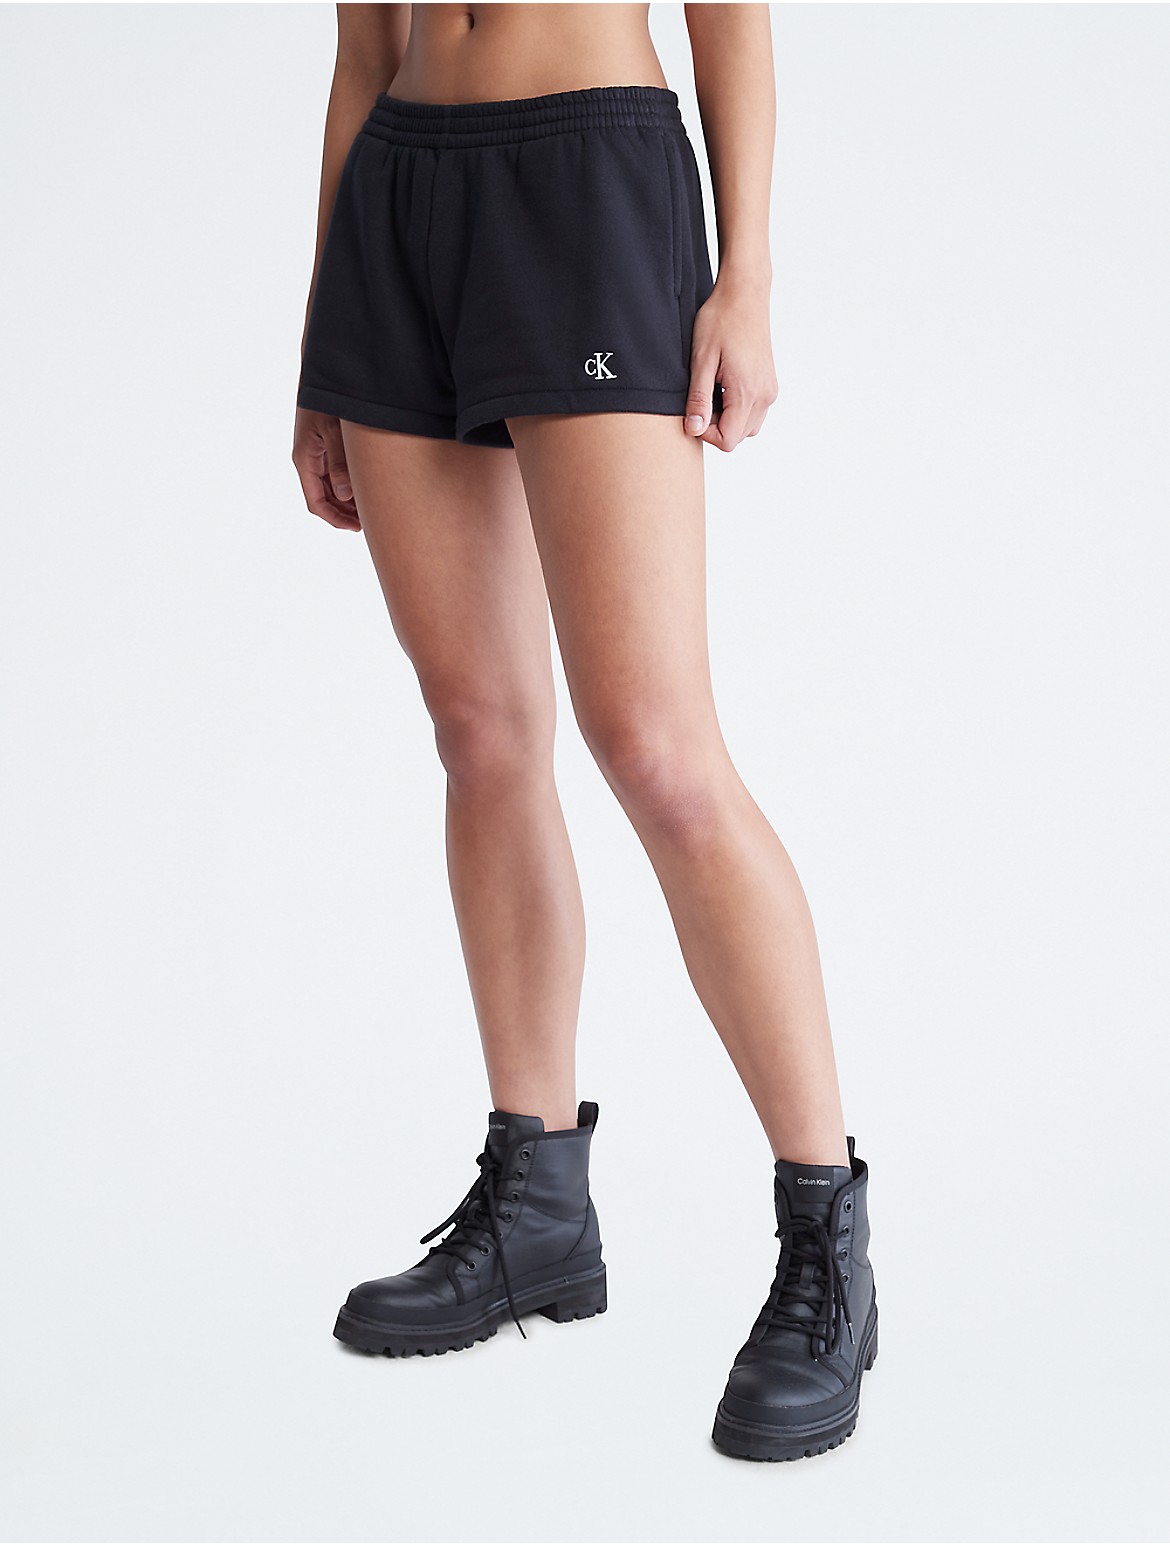 Calvin Klein Women's Archive Logo Fleece Shorts - Black - L